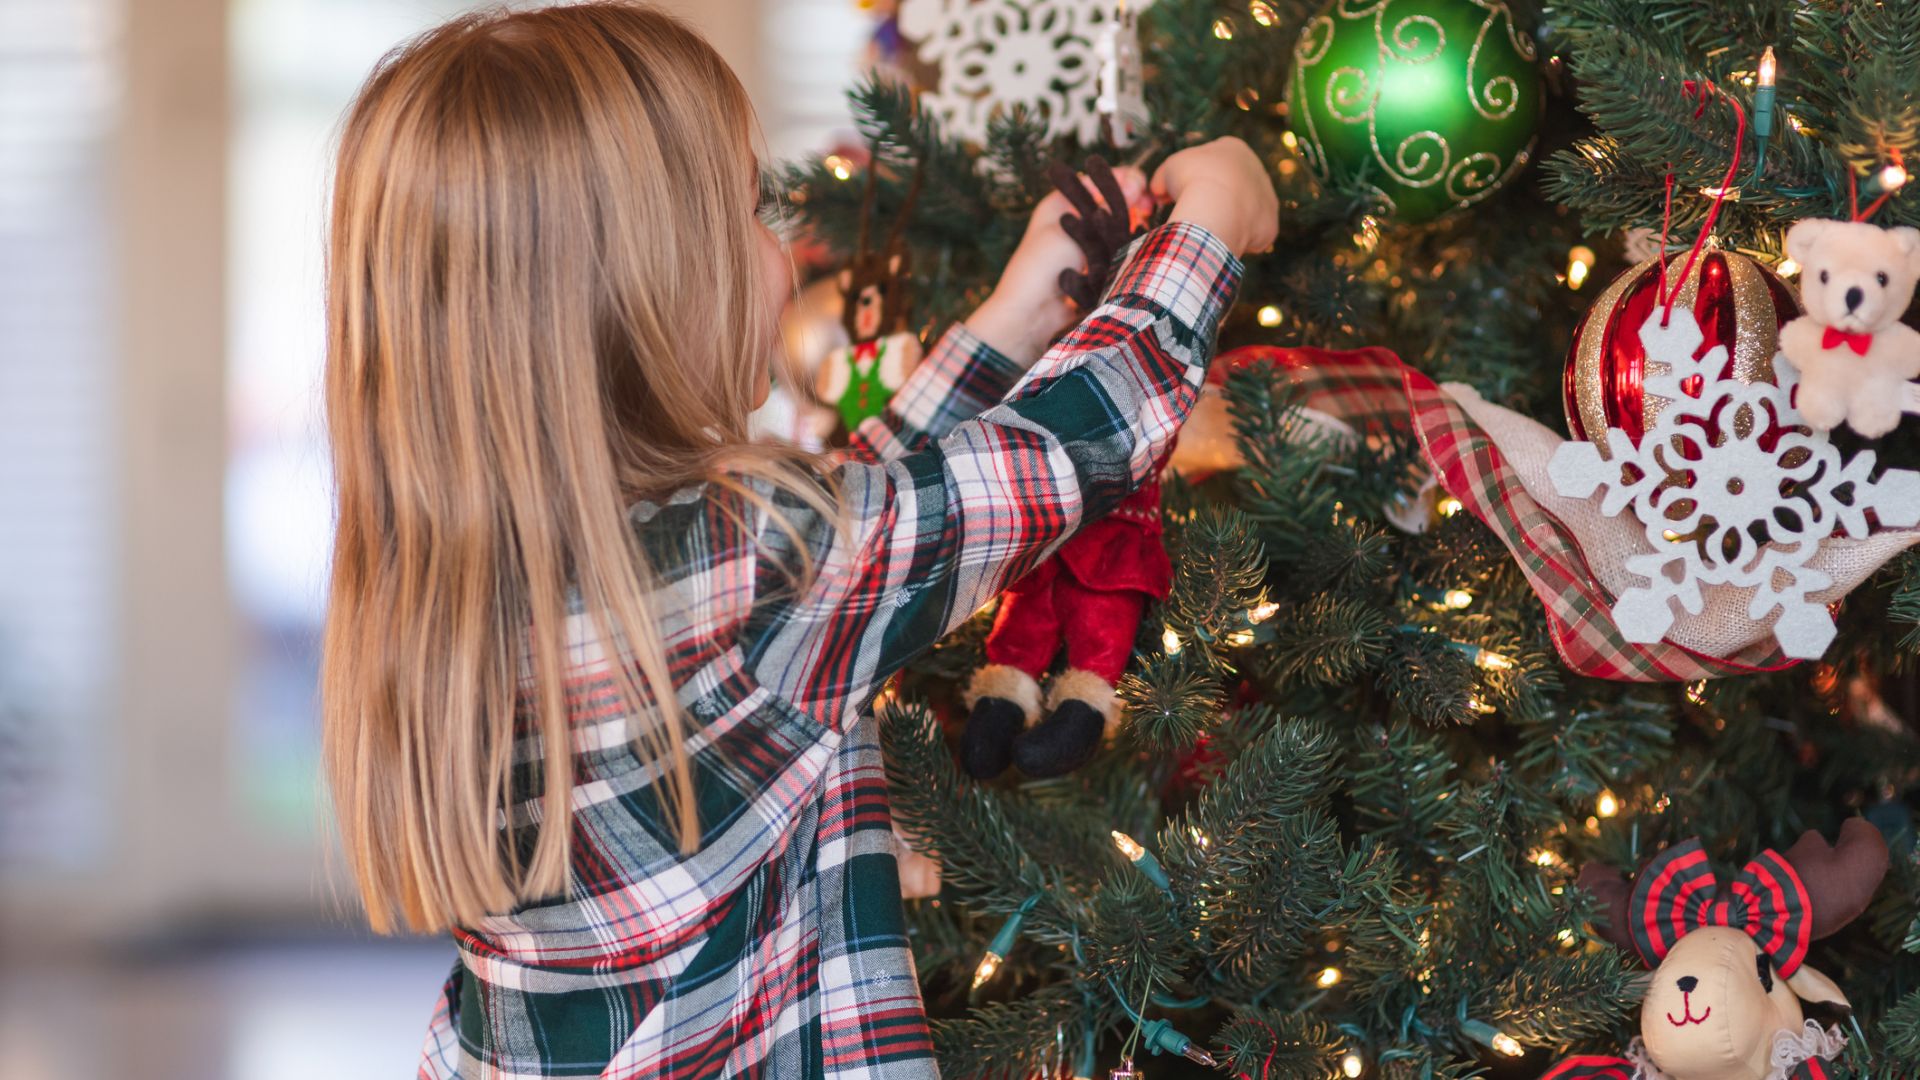 Girl hangs ornaments on the Christmas tree